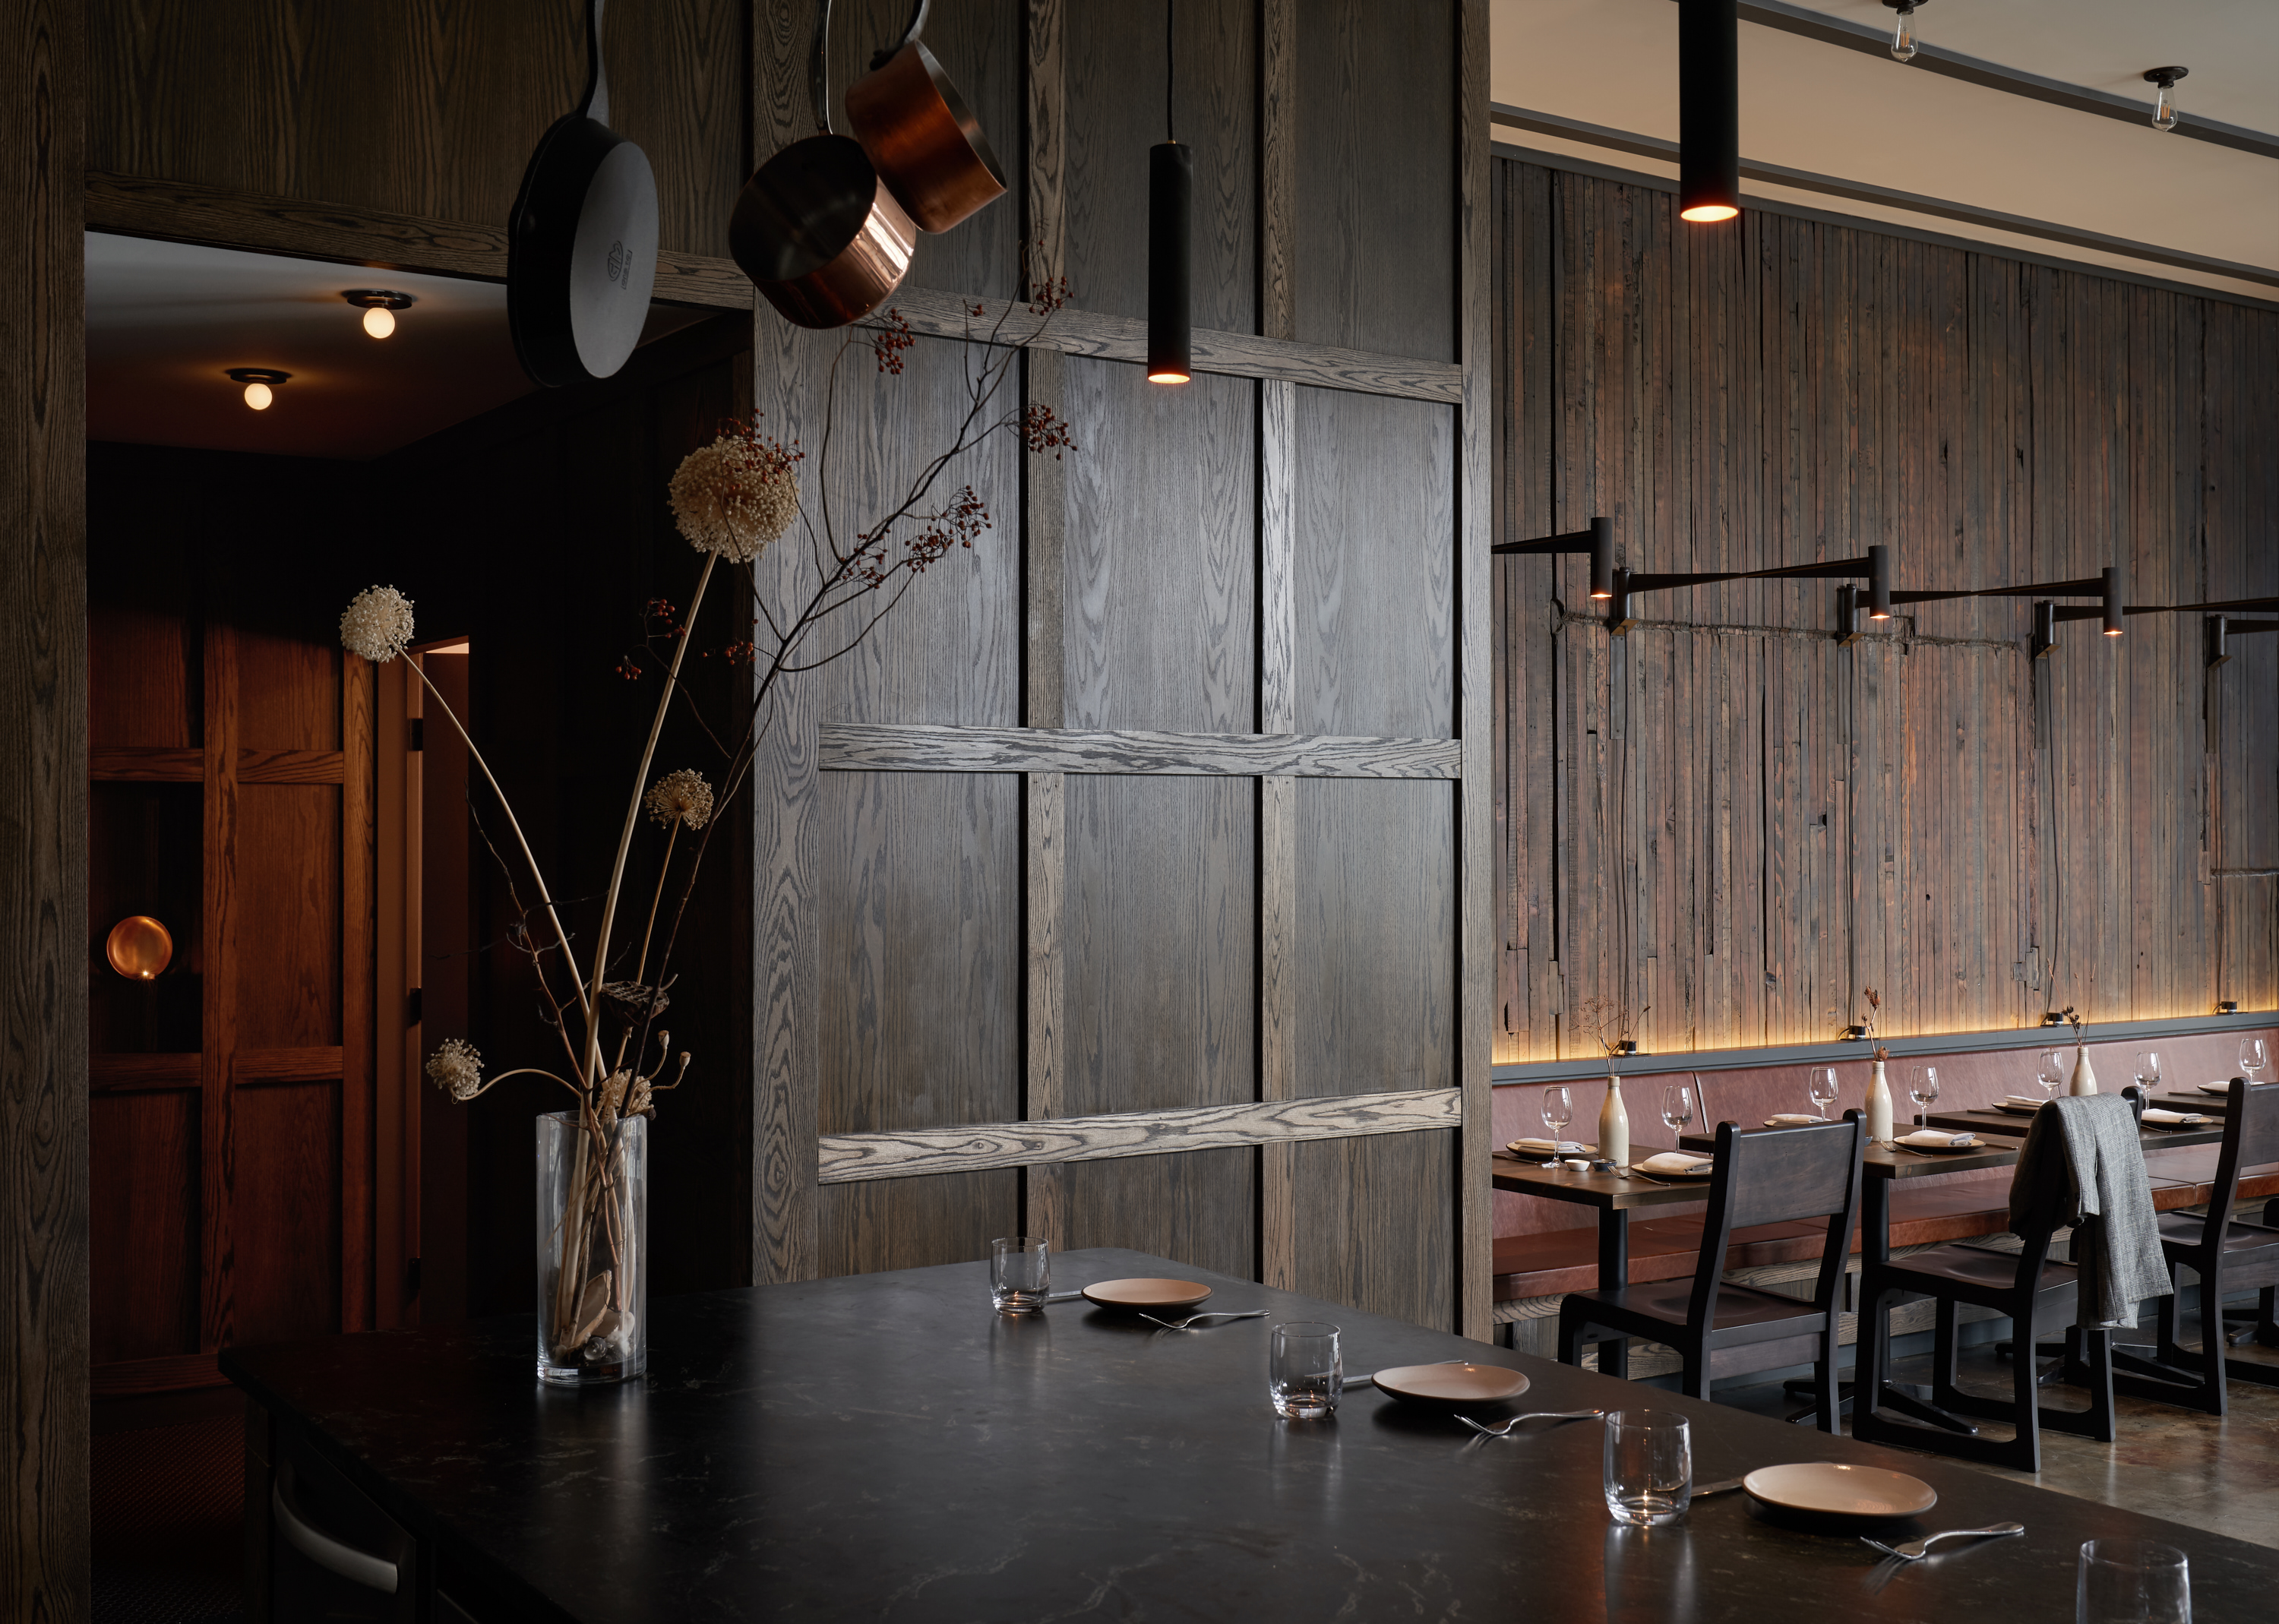 Samara Restaurant: Plant-Inspired, Proud of Old Copper